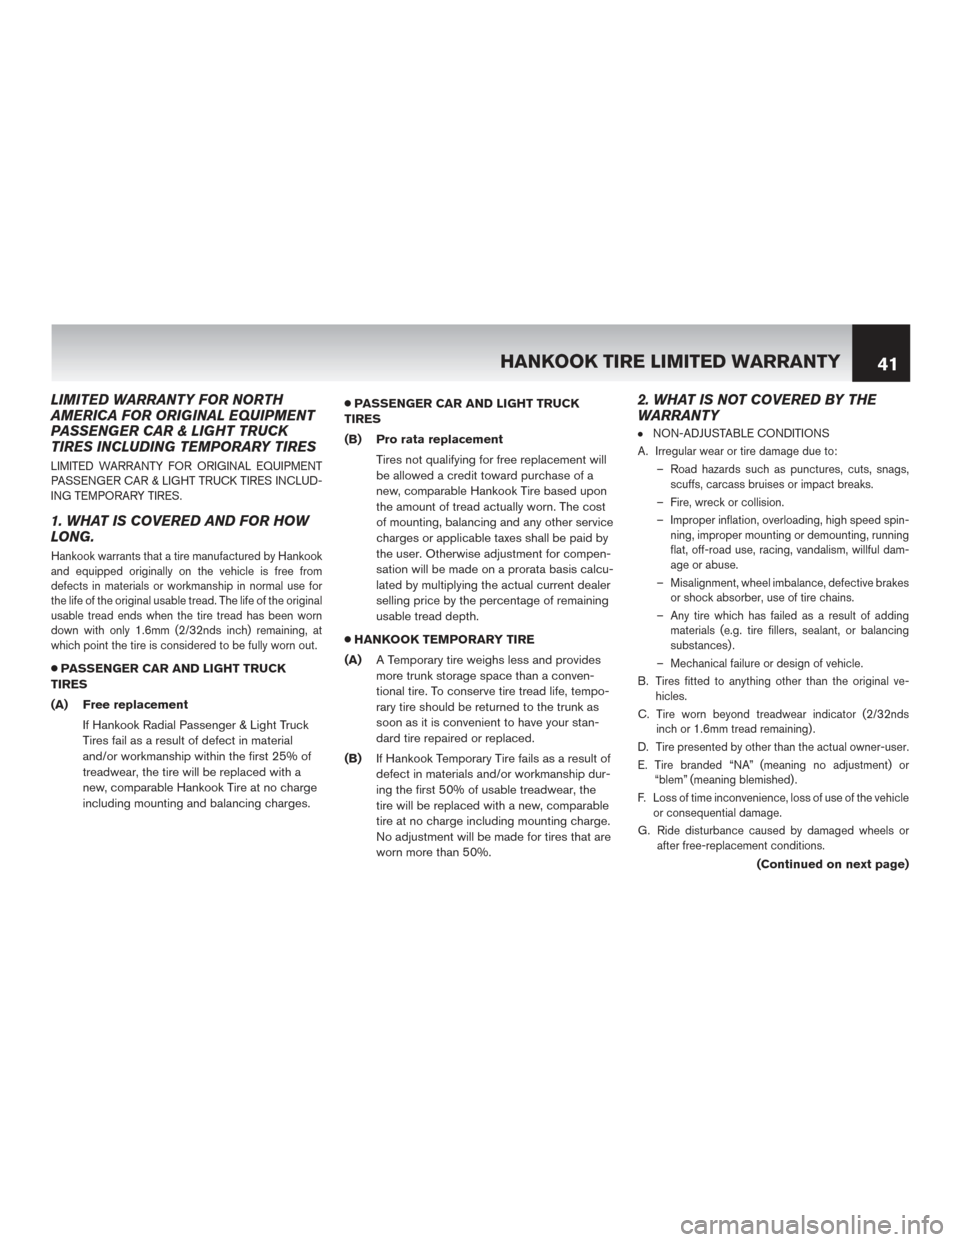 NISSAN MURANO HYBRID 2016 3.G Warranty Booklet LIMITED WARRANTY FOR NORTH
AMERICA FOR ORIGINAL EQUIPMENT
PASSENGER CAR & LIGHT TRUCK
TIRES INCLUDING TEMPORARY TIRES
LIMITED WARRANTY FOR ORIGINAL EQUIPMENT
PASSENGER CAR & LIGHT TRUCK TIRES INCLUD-
